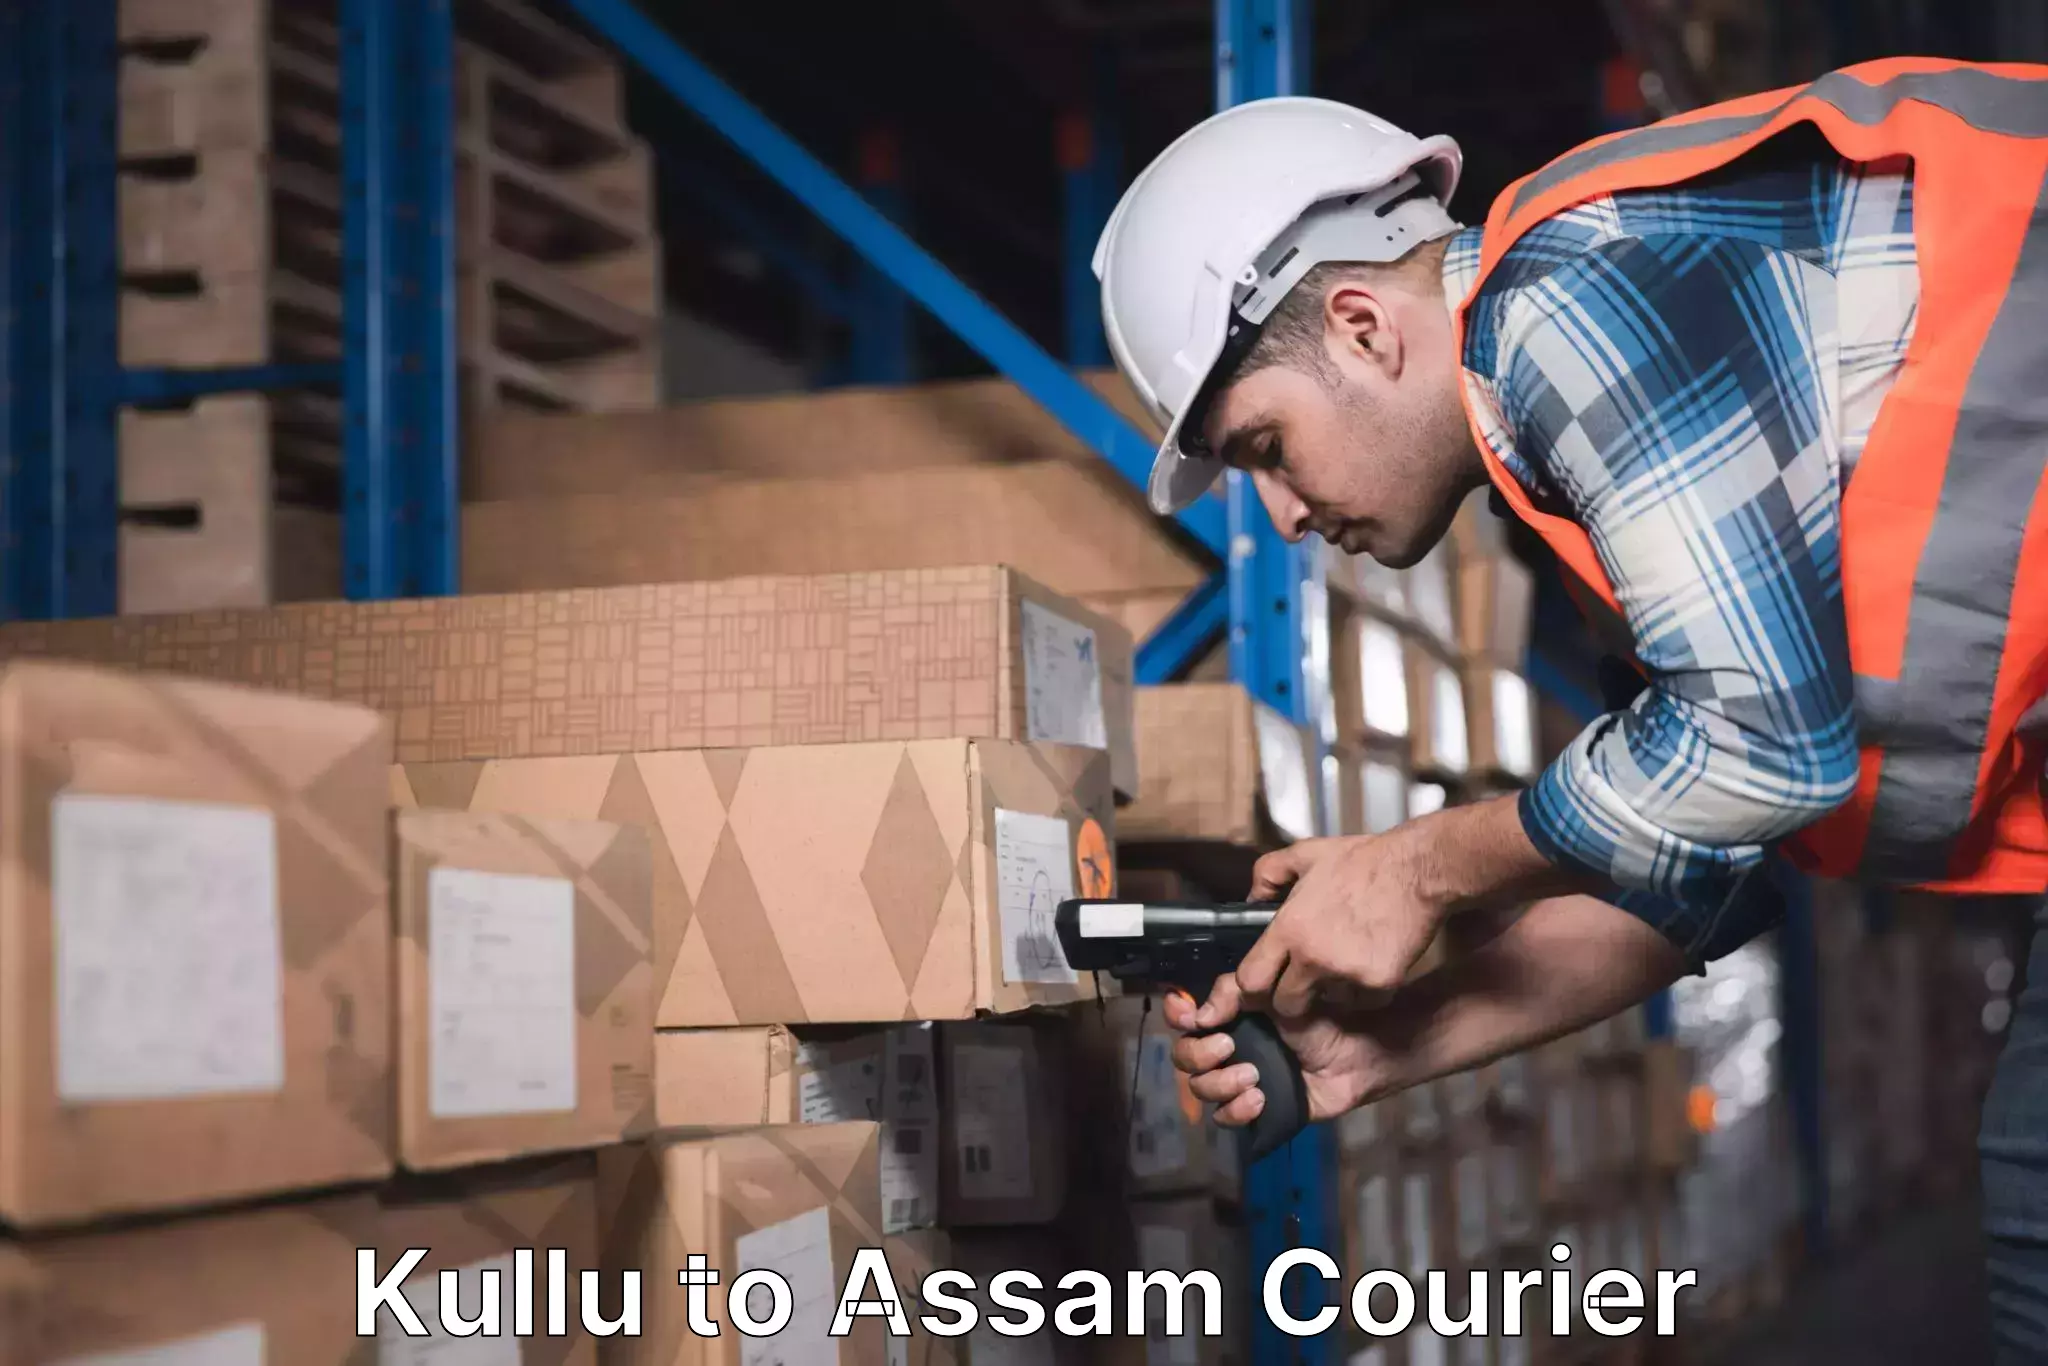 Courier app Kullu to Hajo